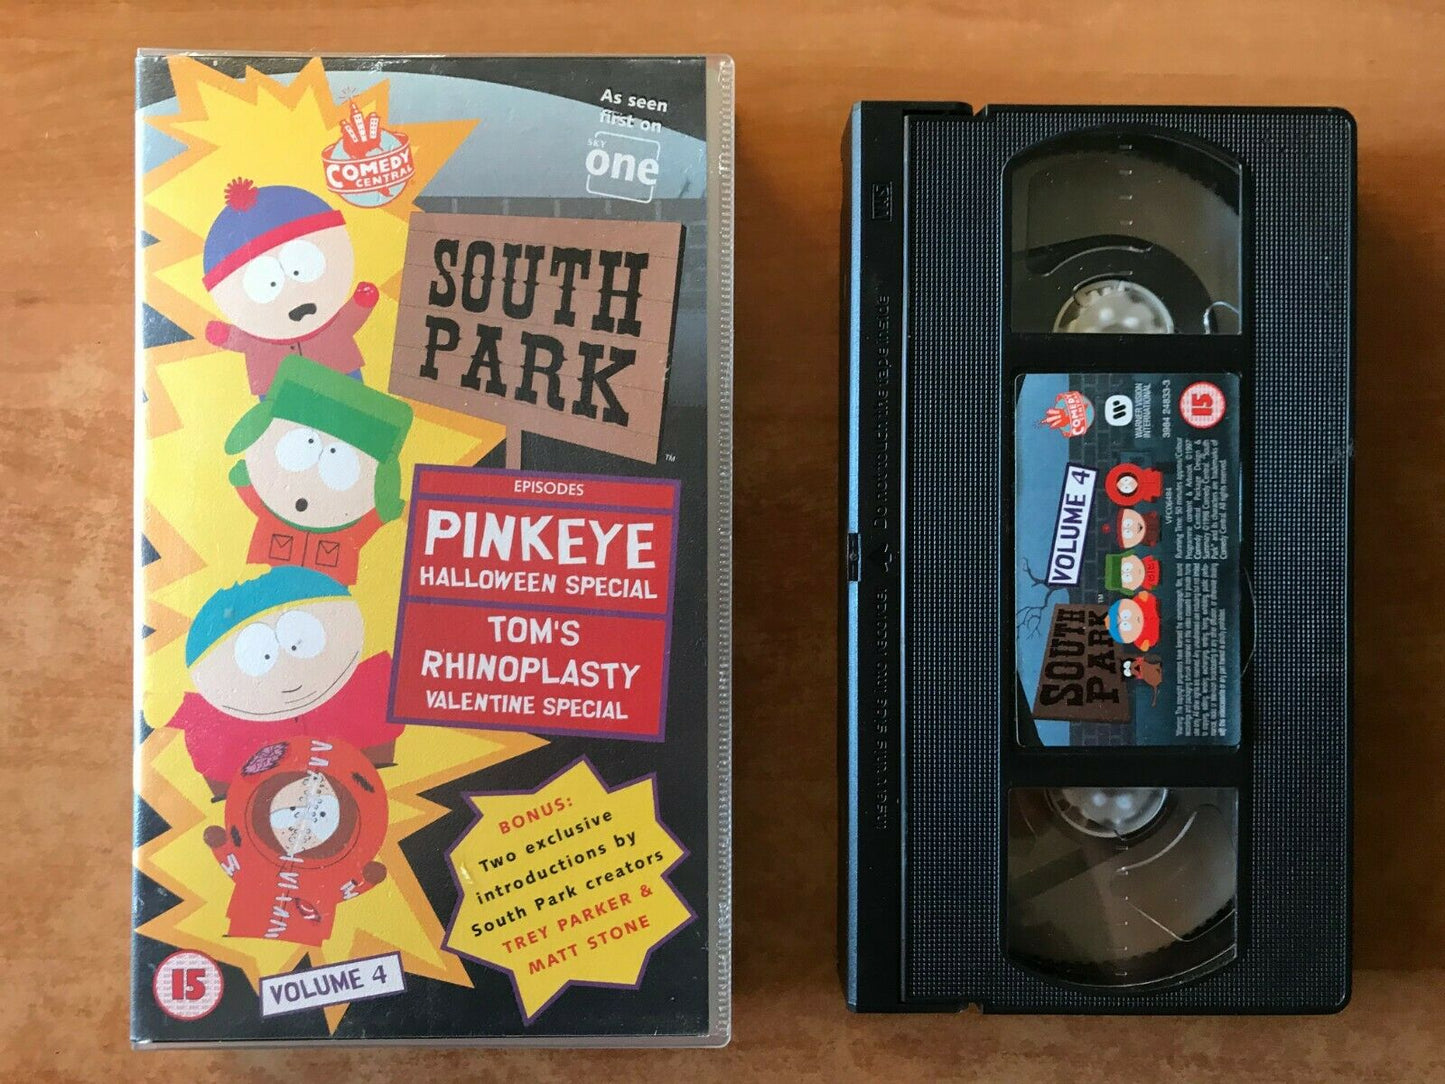 South Park (Vol. 4): Pinkeye [Halloween Special] TV Series - Comedy - Pal VHS-